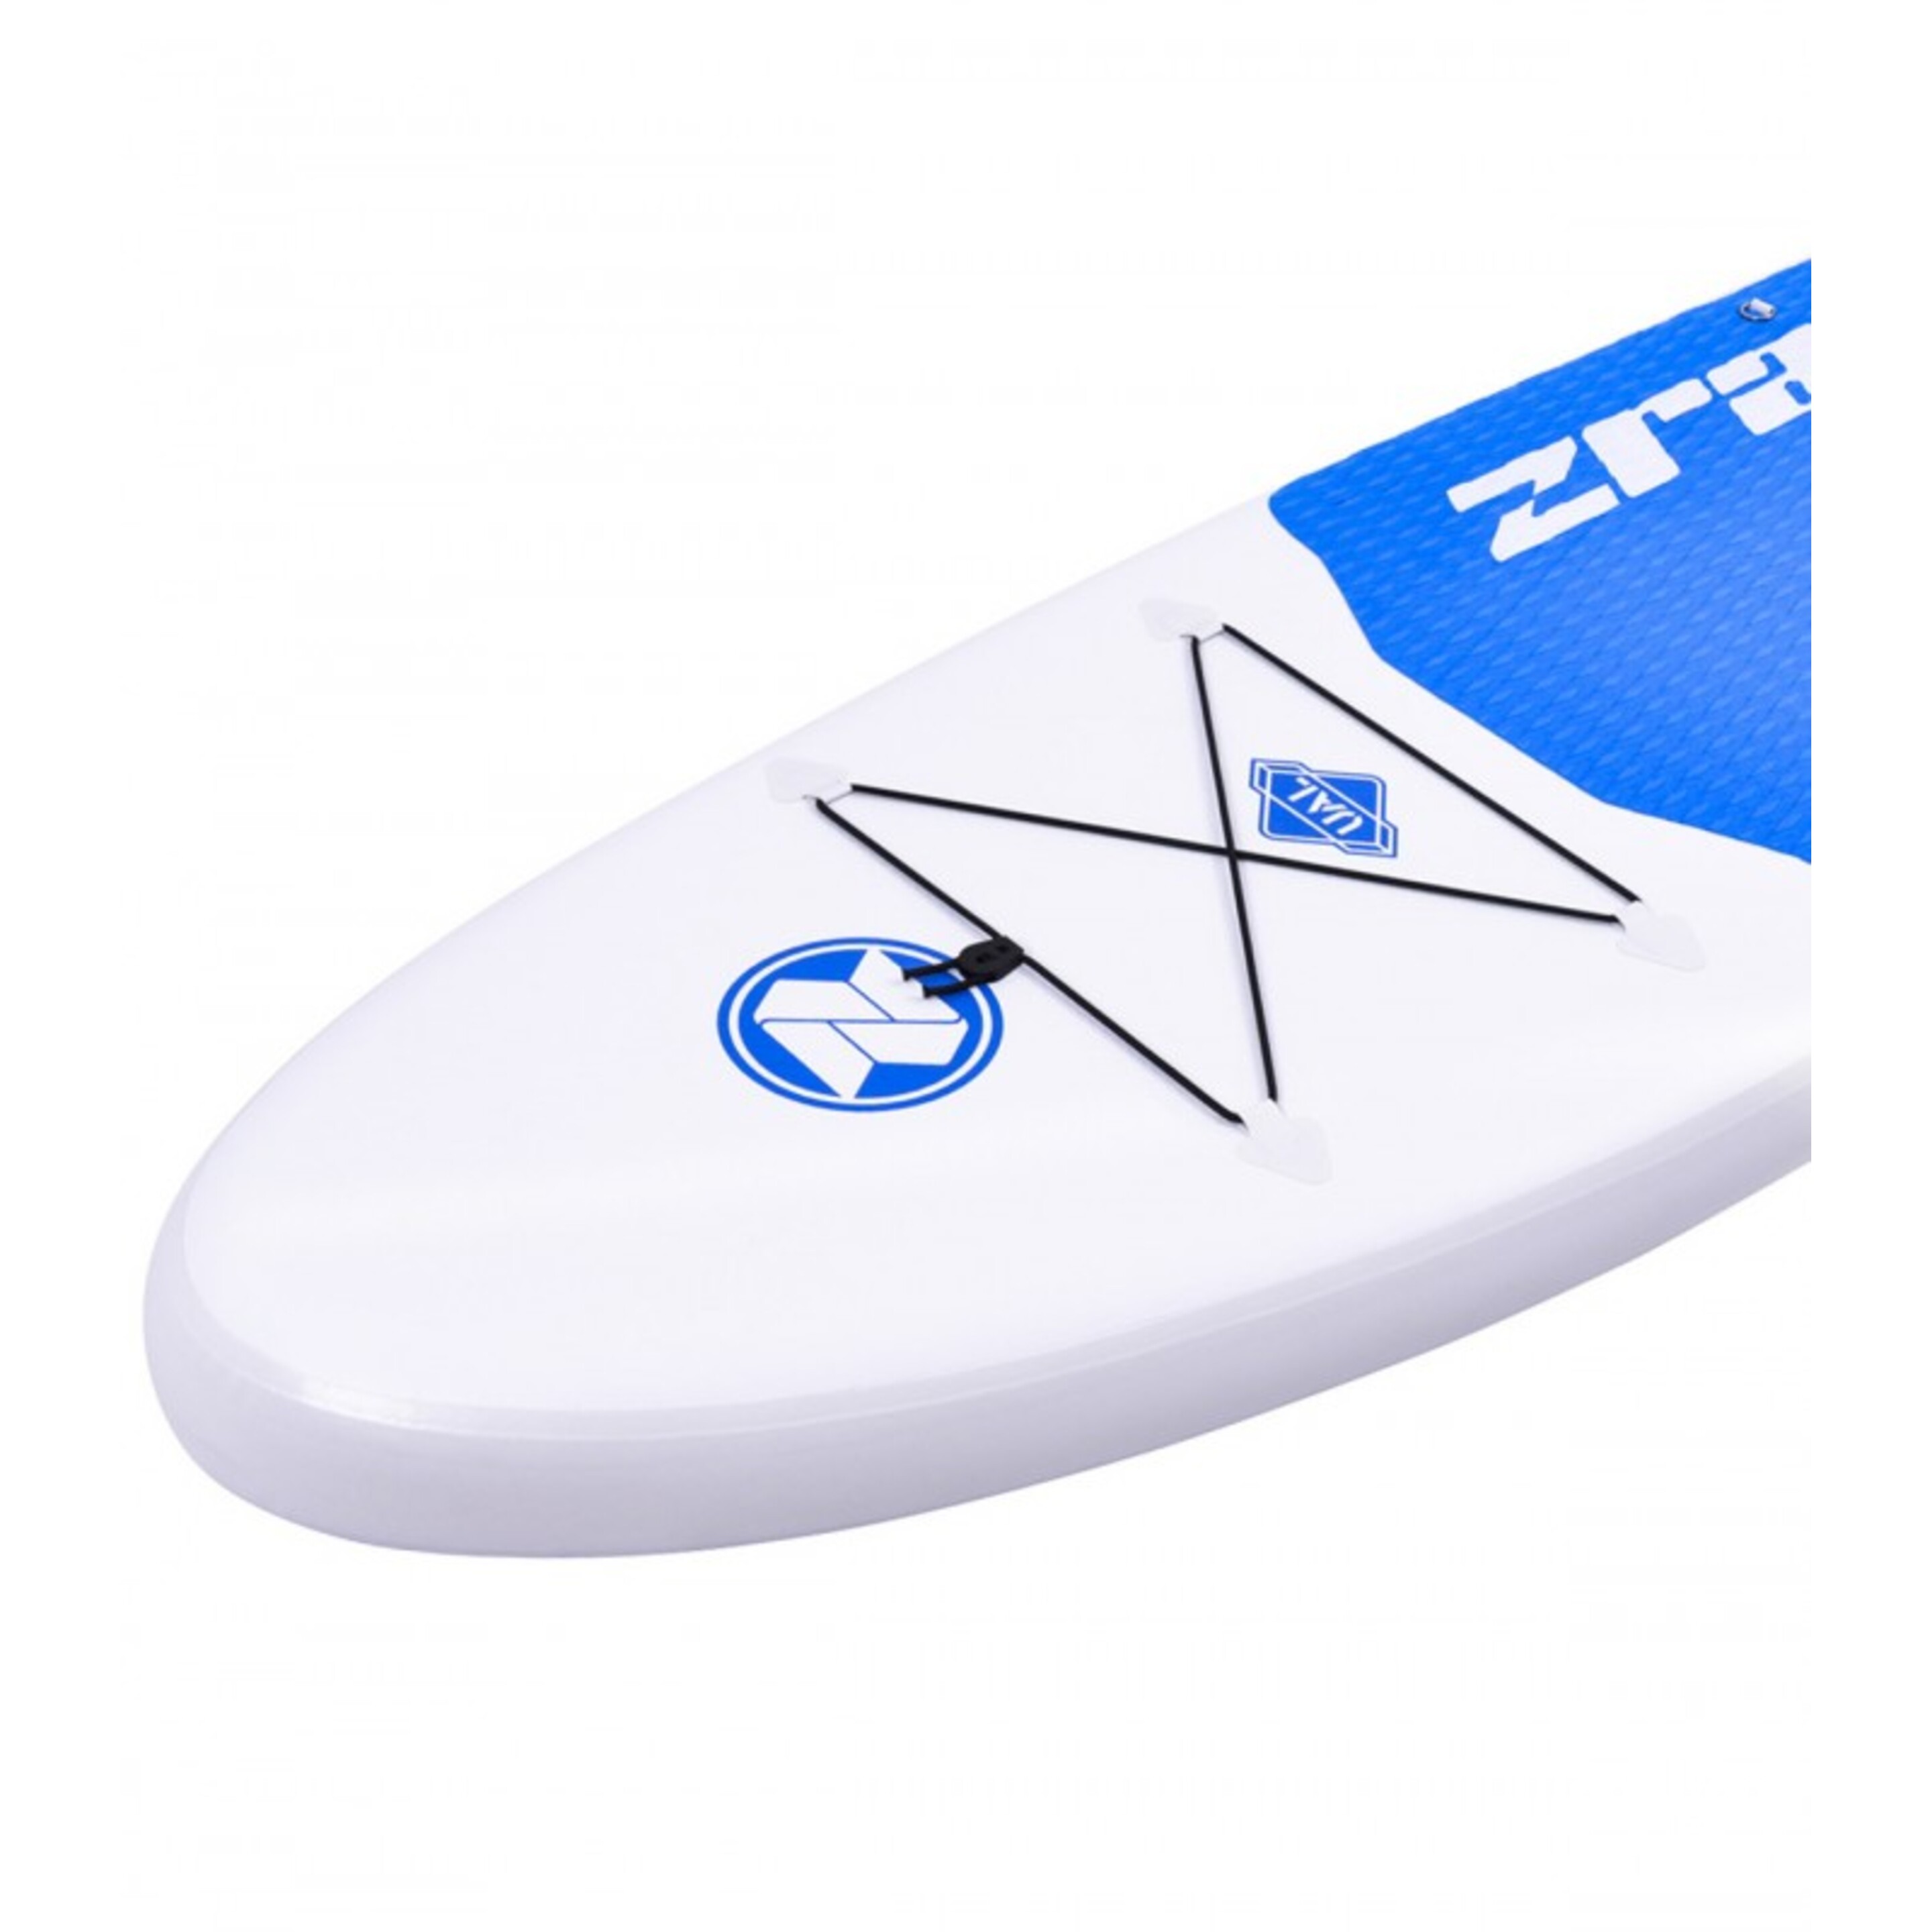 Tabla Paddle Surf Hinchable Zray X-rider X3 12,0